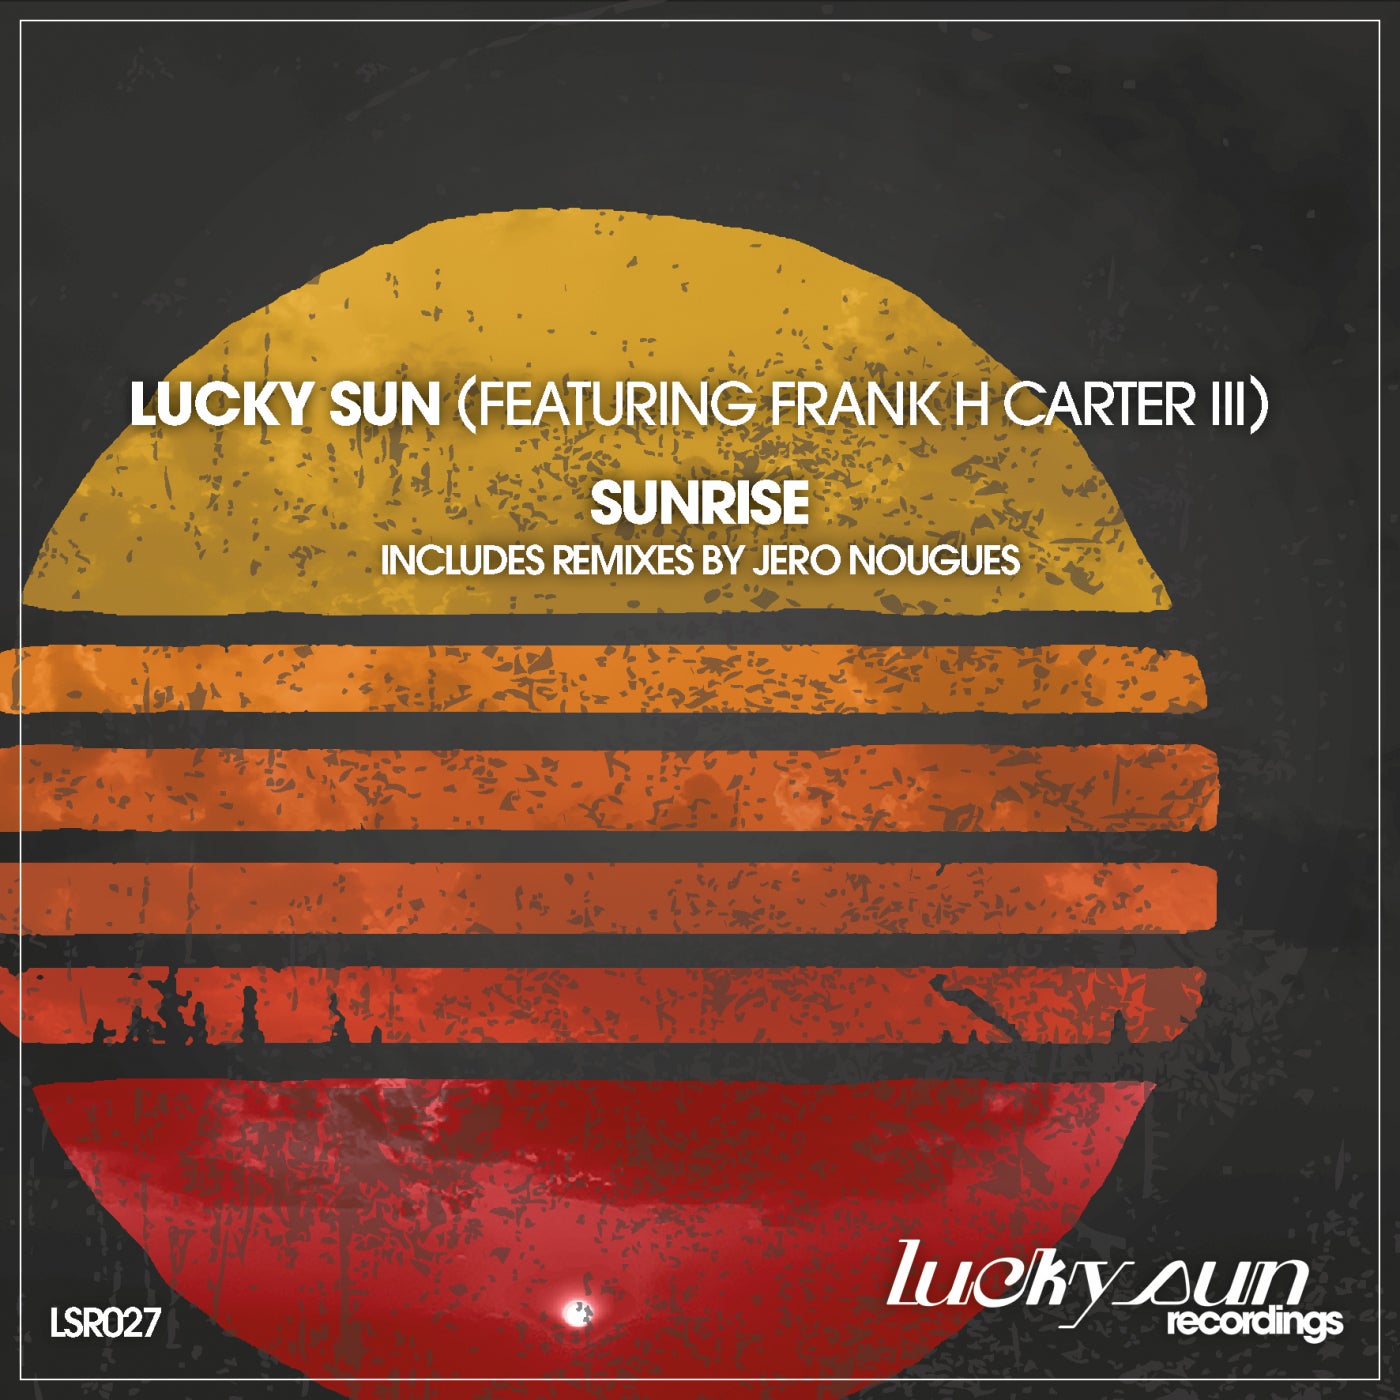 Frank h Carter III. Sun feat.. Luck Sun. Franka III.